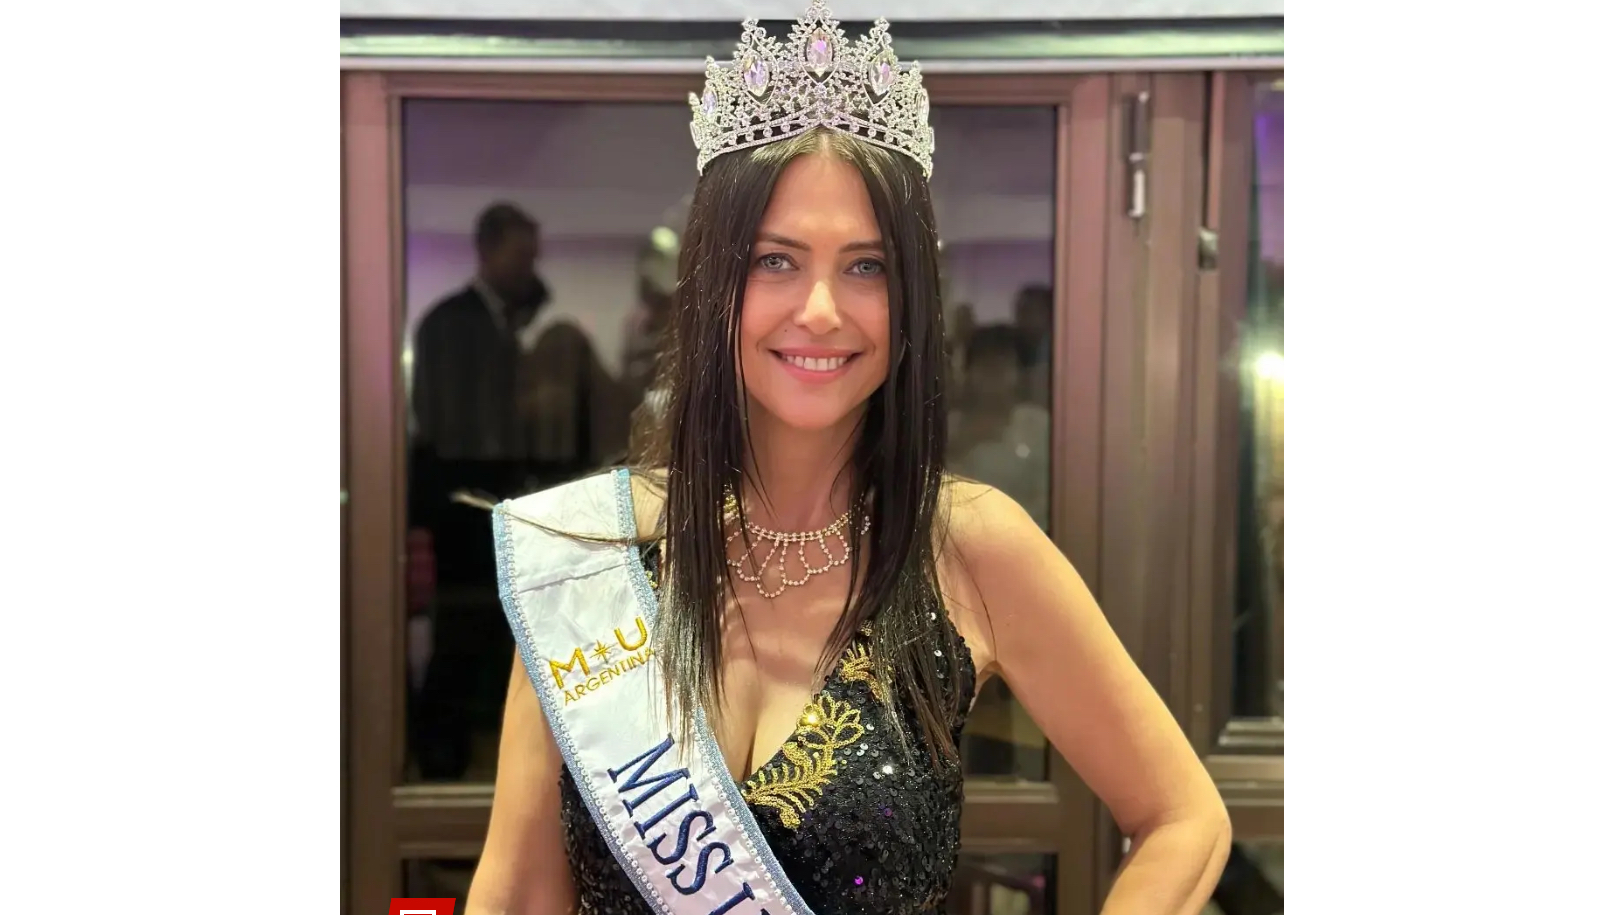 Alejandra Marisa Rodriguez terpilih dalam kontes kecantikan Miss Argentina meski usianya sudah 60 tahun. Di usia yang tak muda lagi, Alejandra masih terlihat menawan.